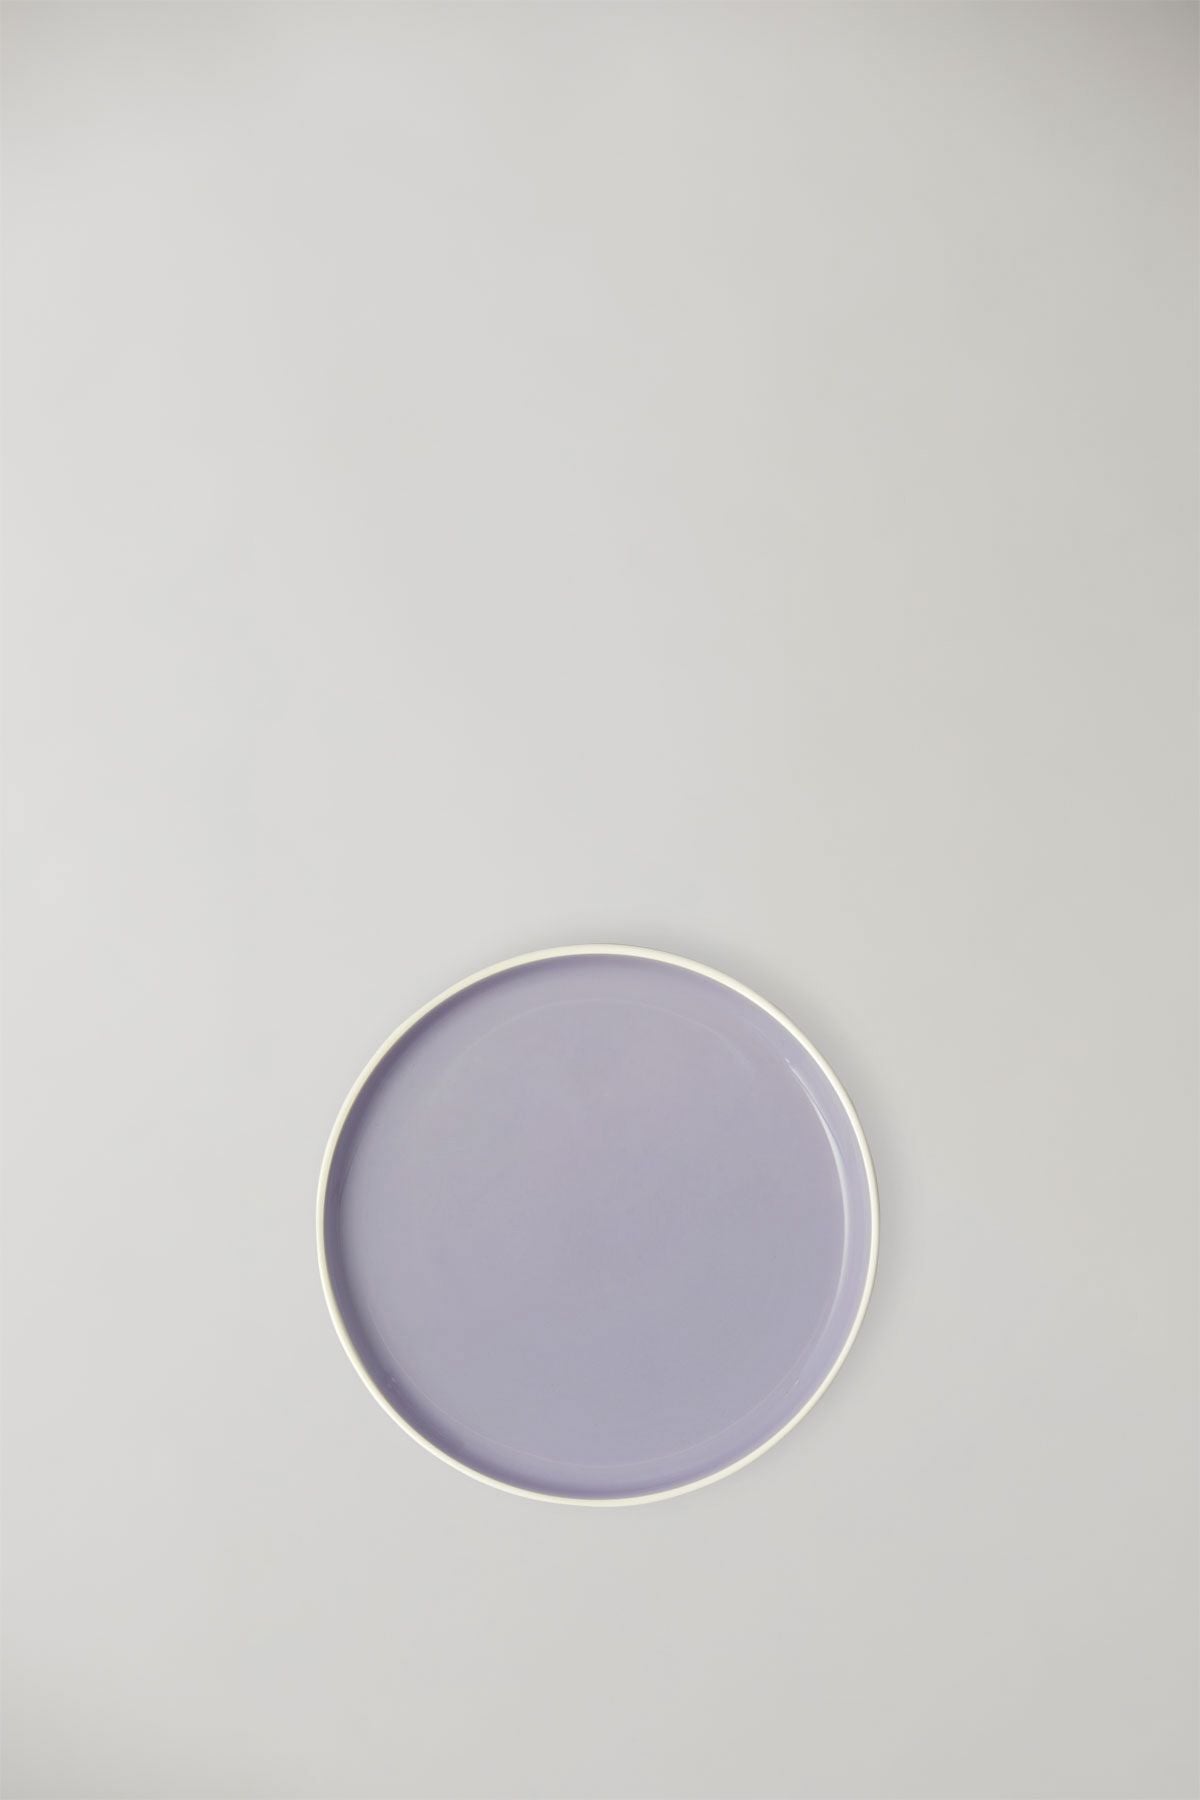 Studio About Clayware Set Of 2 Plates Medium, Ivory/Light Purple